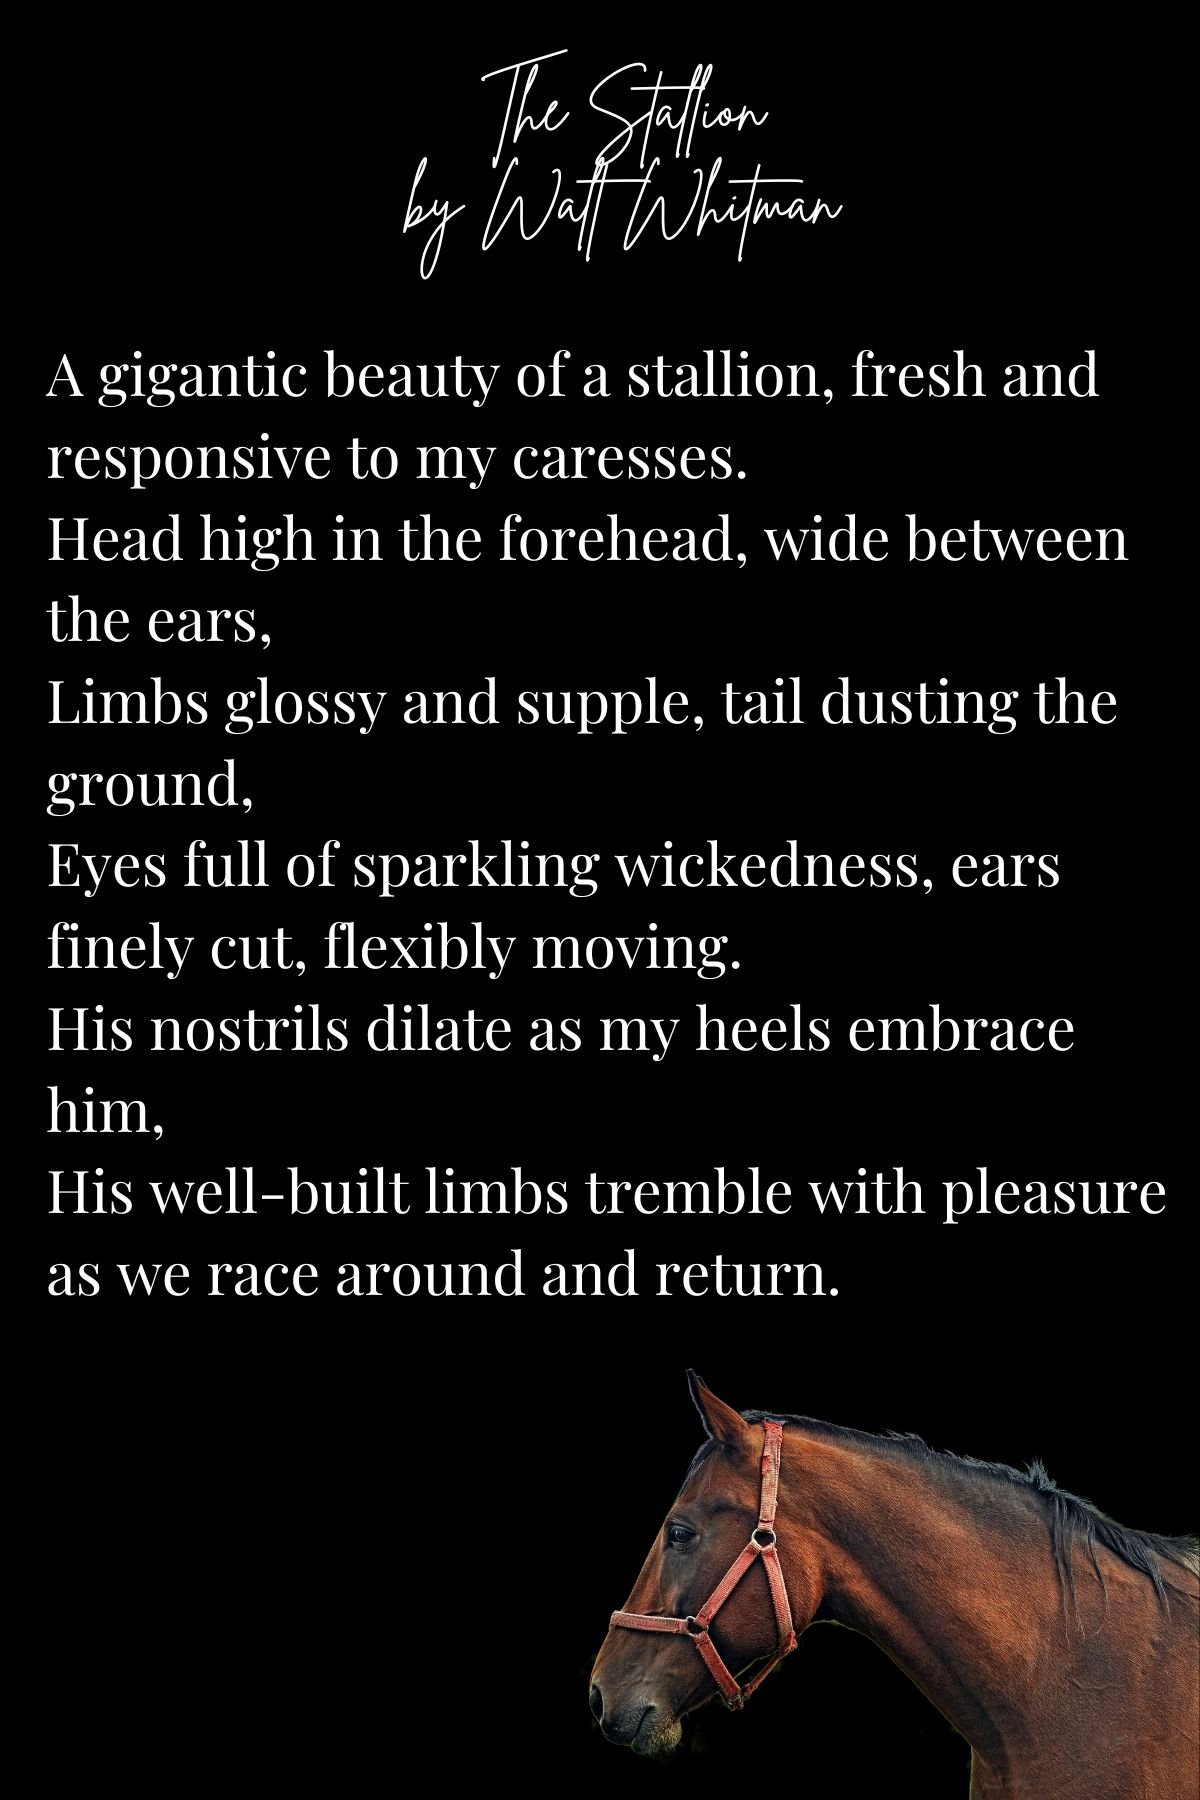 walt whitman poem about stallions